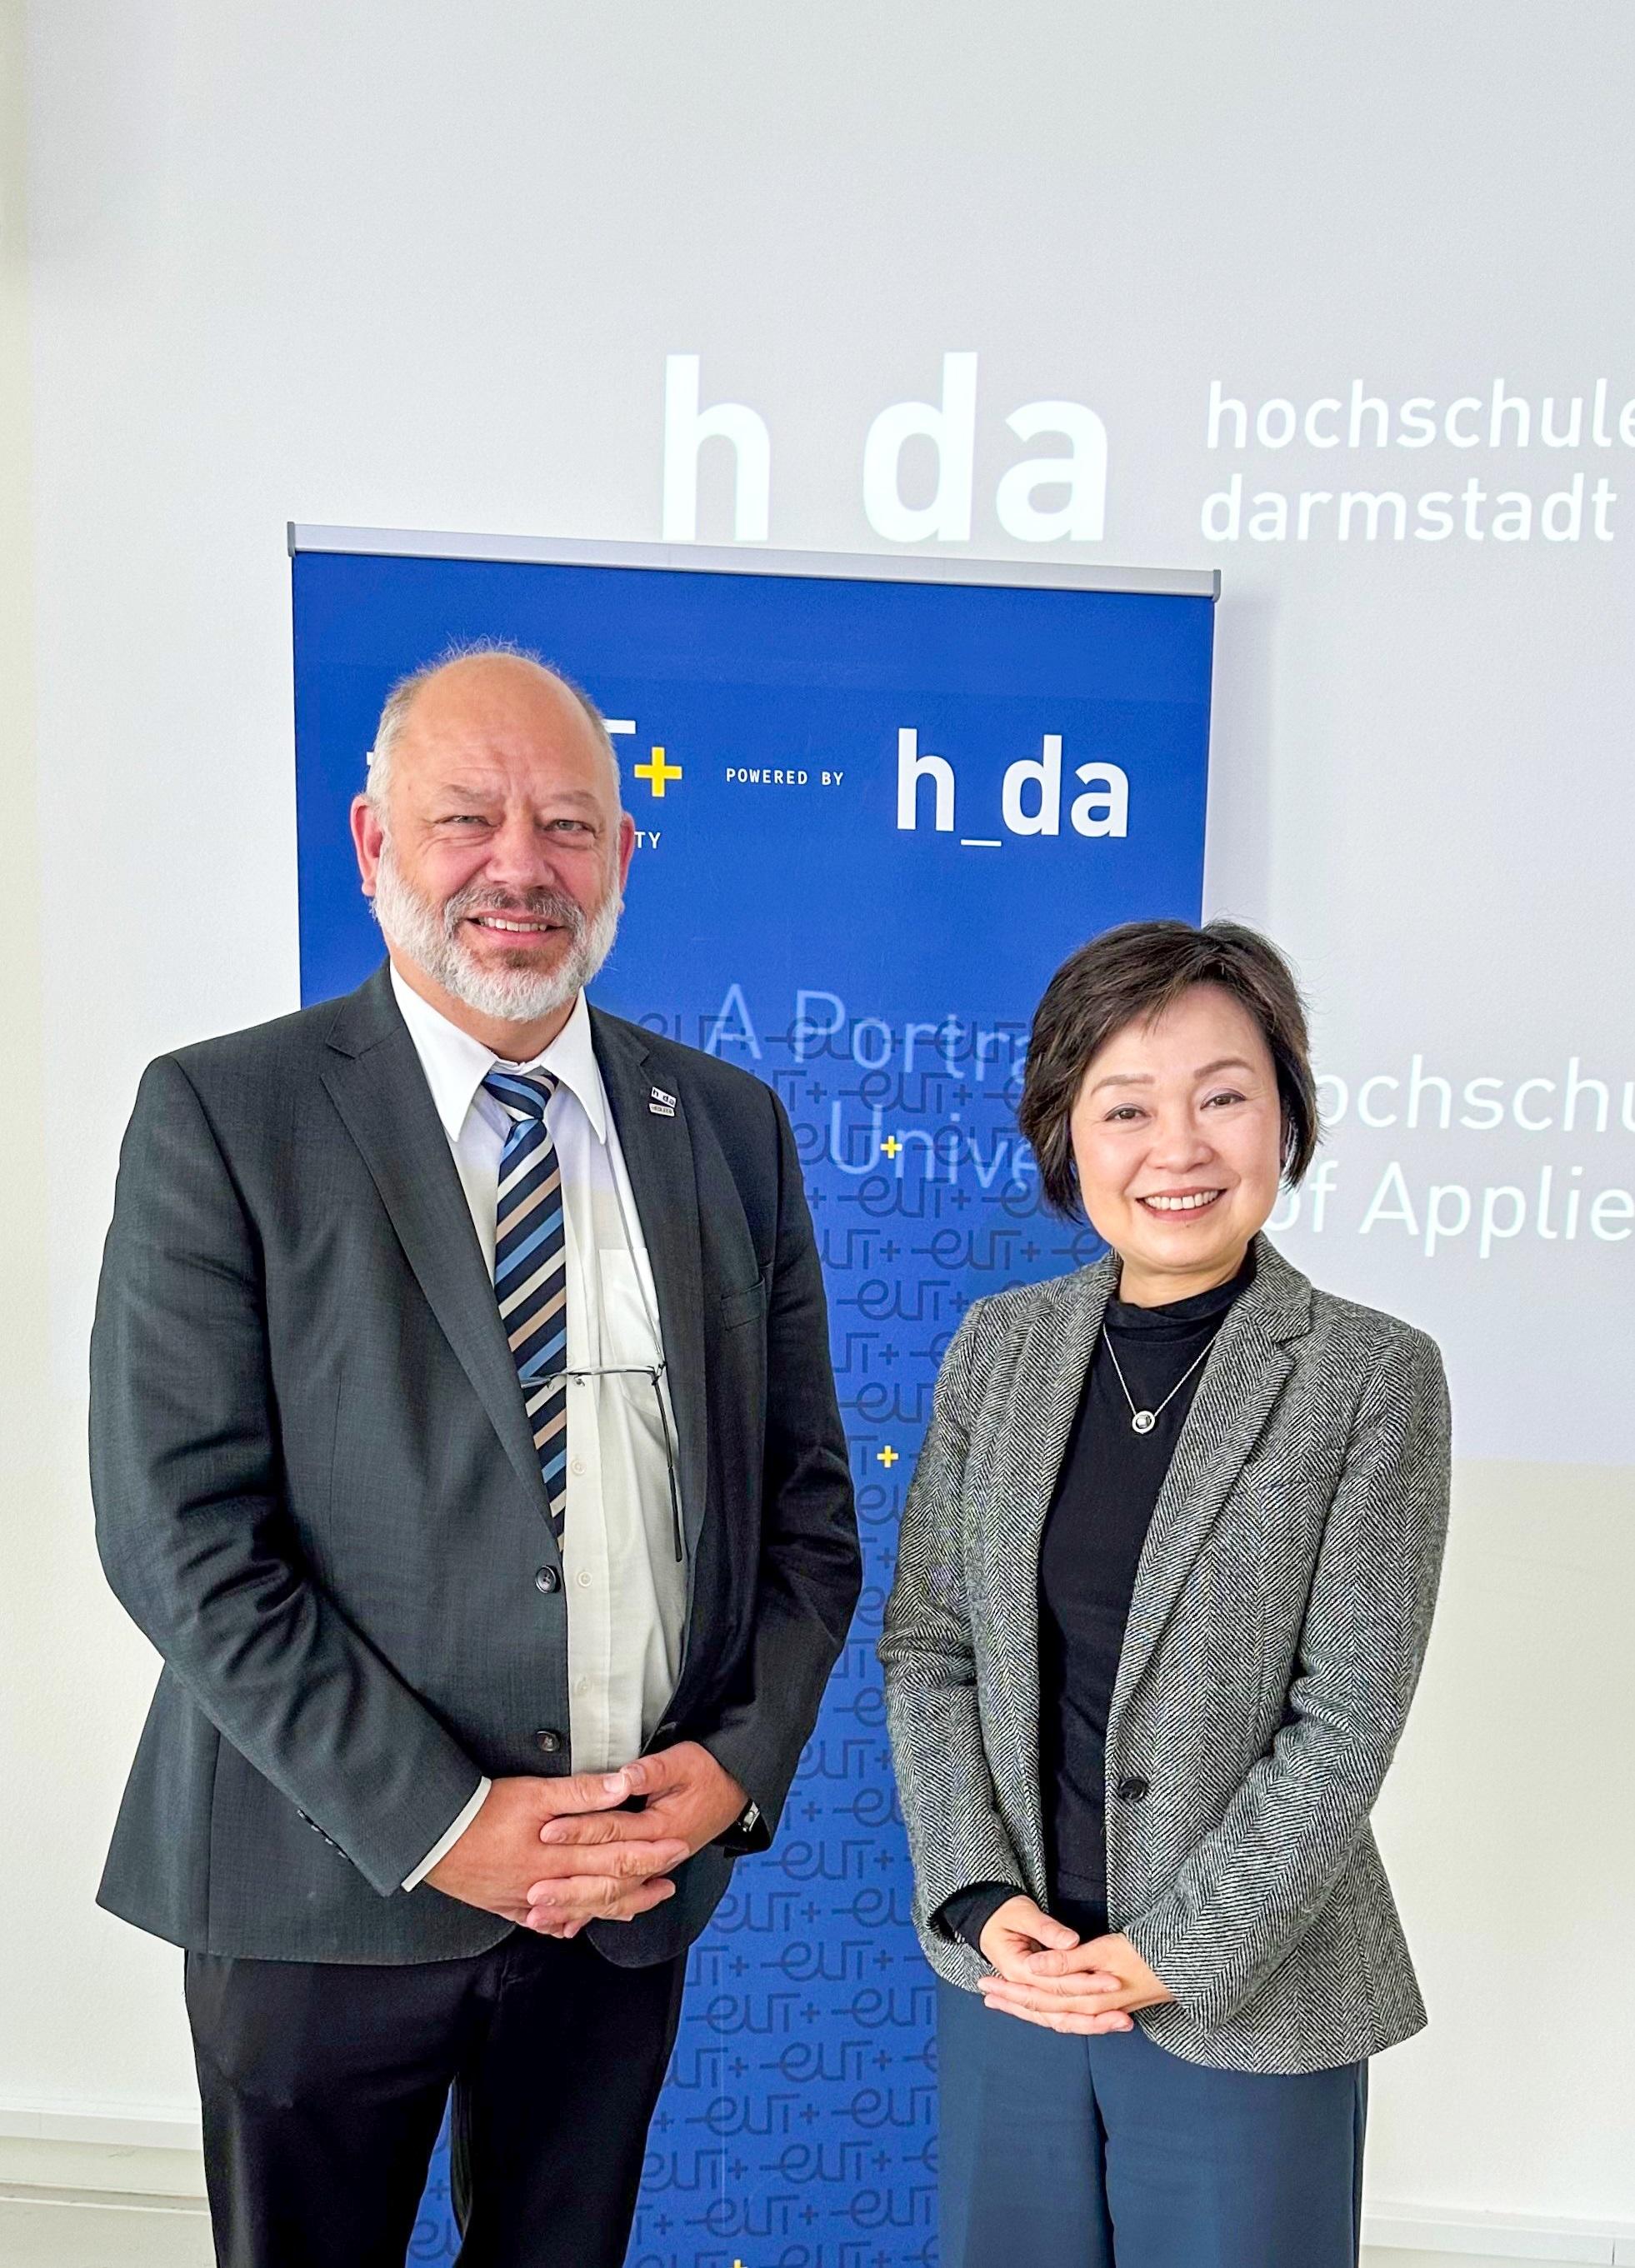 The Secretary for Education, Dr Choi Yuk-lin (right), meets the President of the Darmstadt University of Applied Sciences, Professor Dr Arnd Steinmetz (left), in Frankfurt, Germany, on April 22 (Frankfurt time).